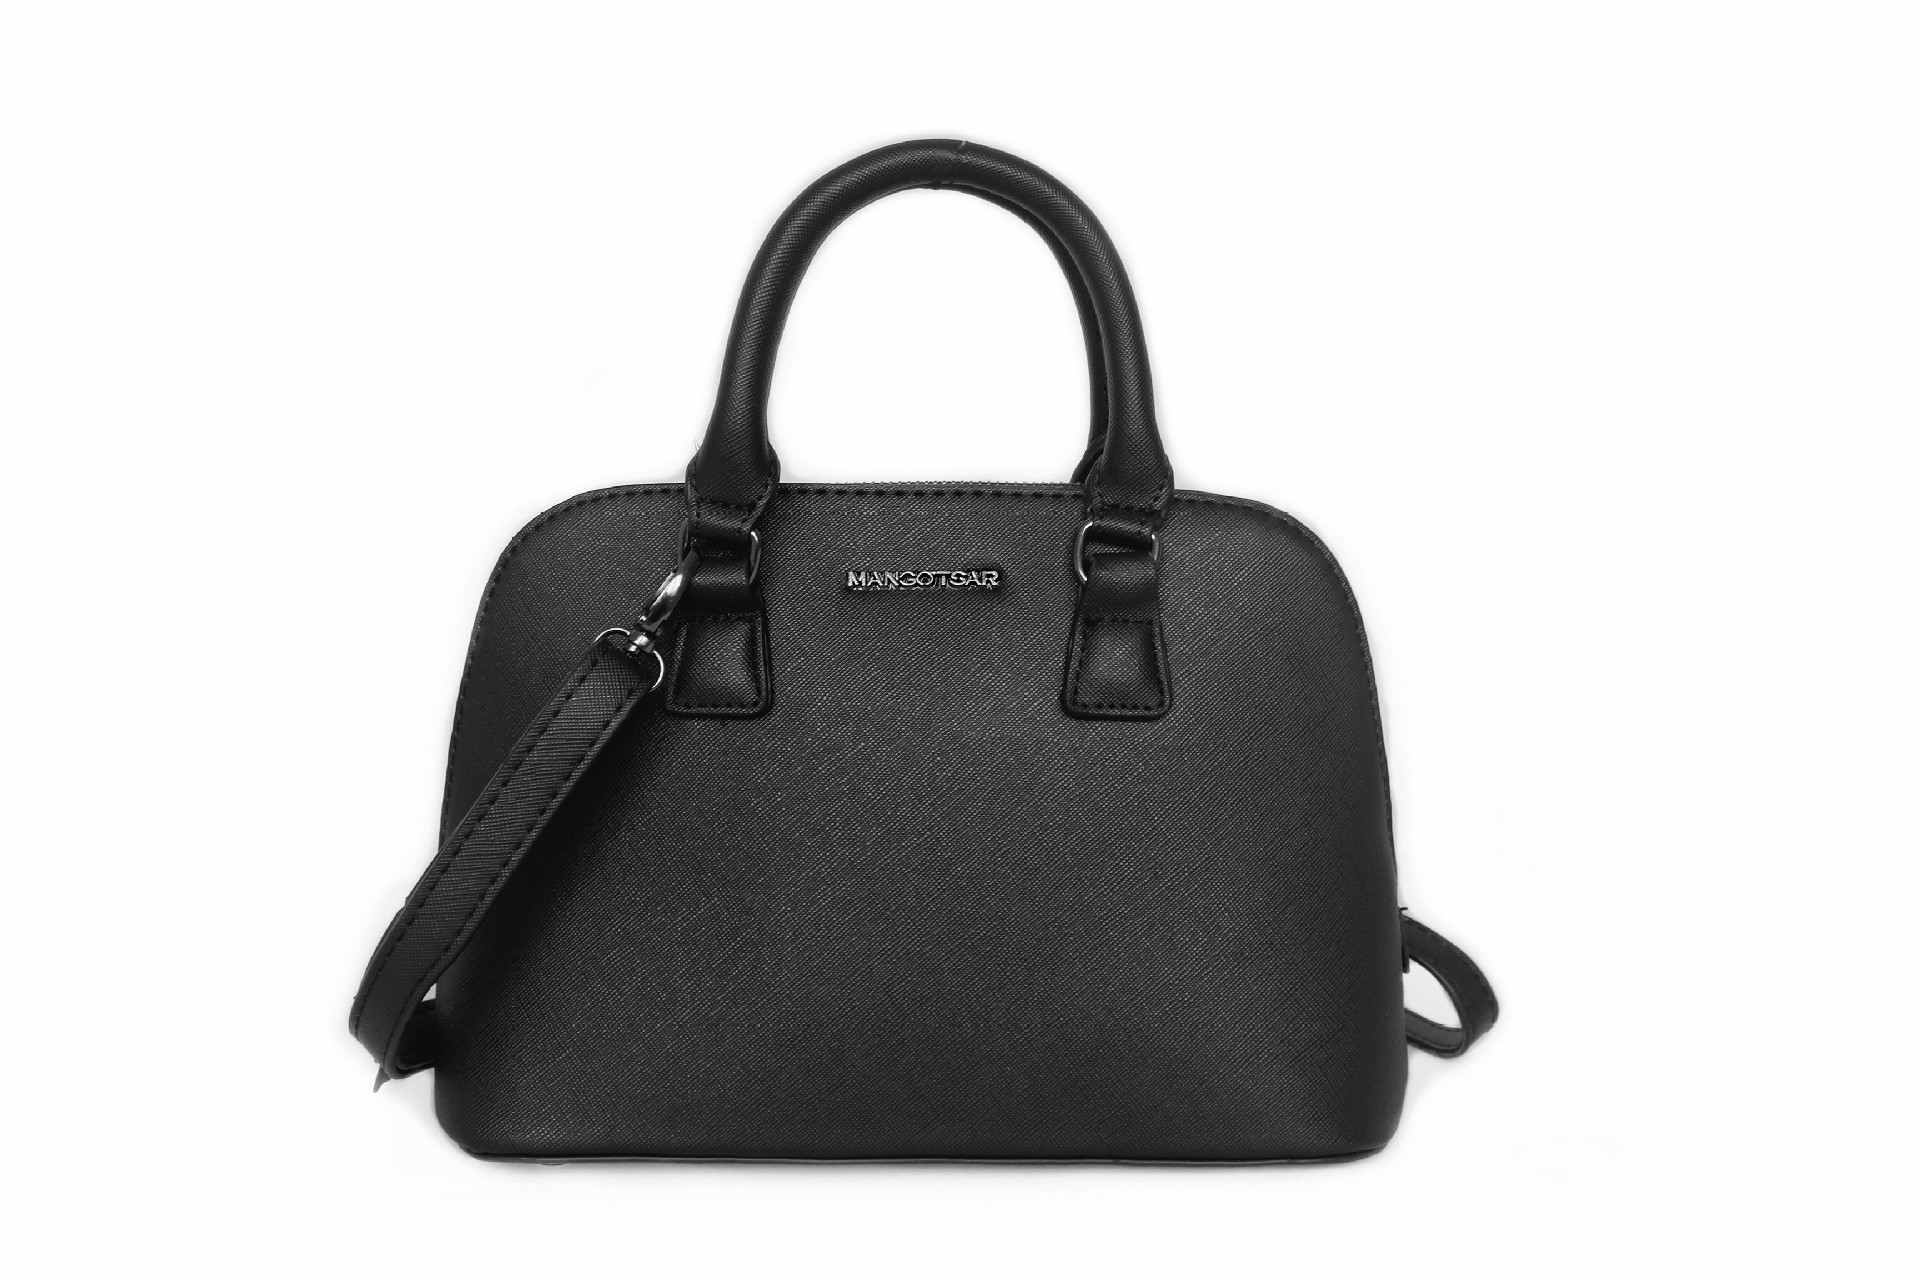 MANGO TSAR women's bag 2019 new handbag...